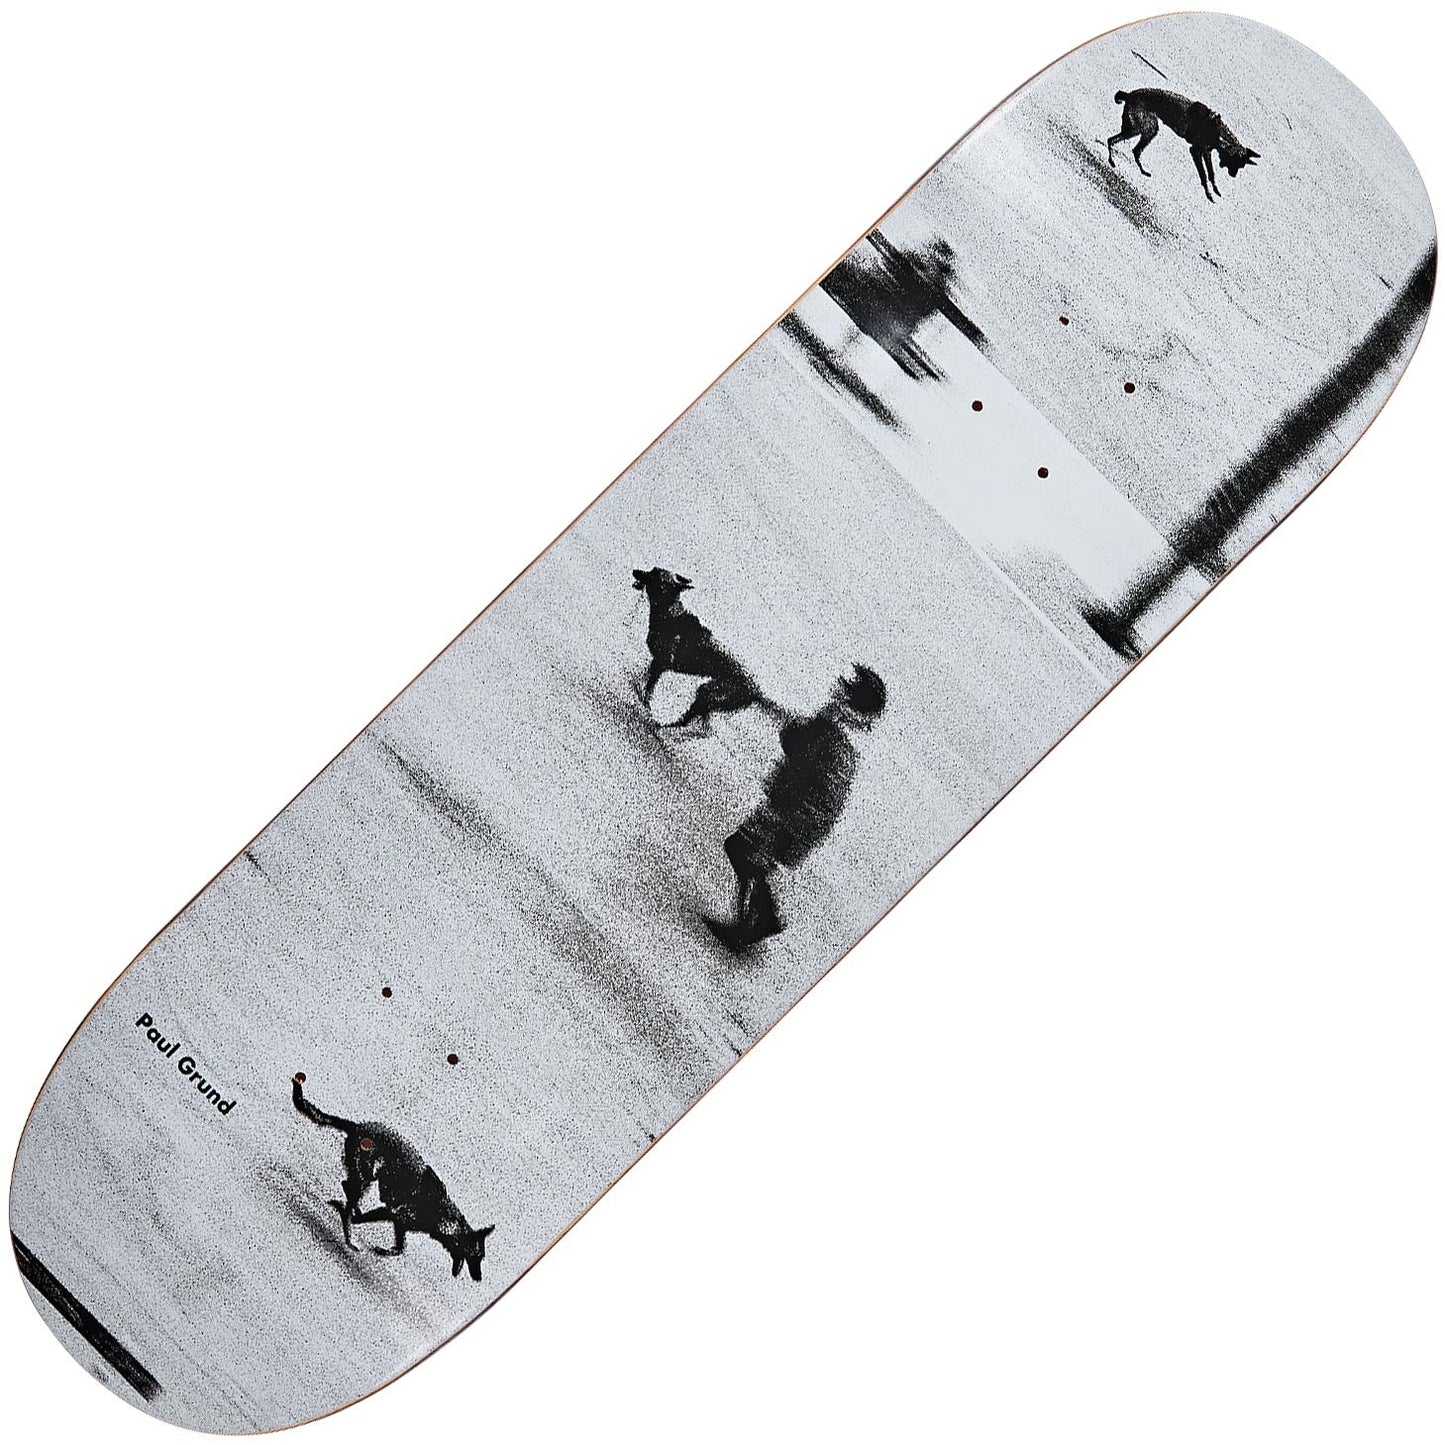 Polar Paul Grund Dog Studies deck (8.75") - Tiki Room Skateboards - 1